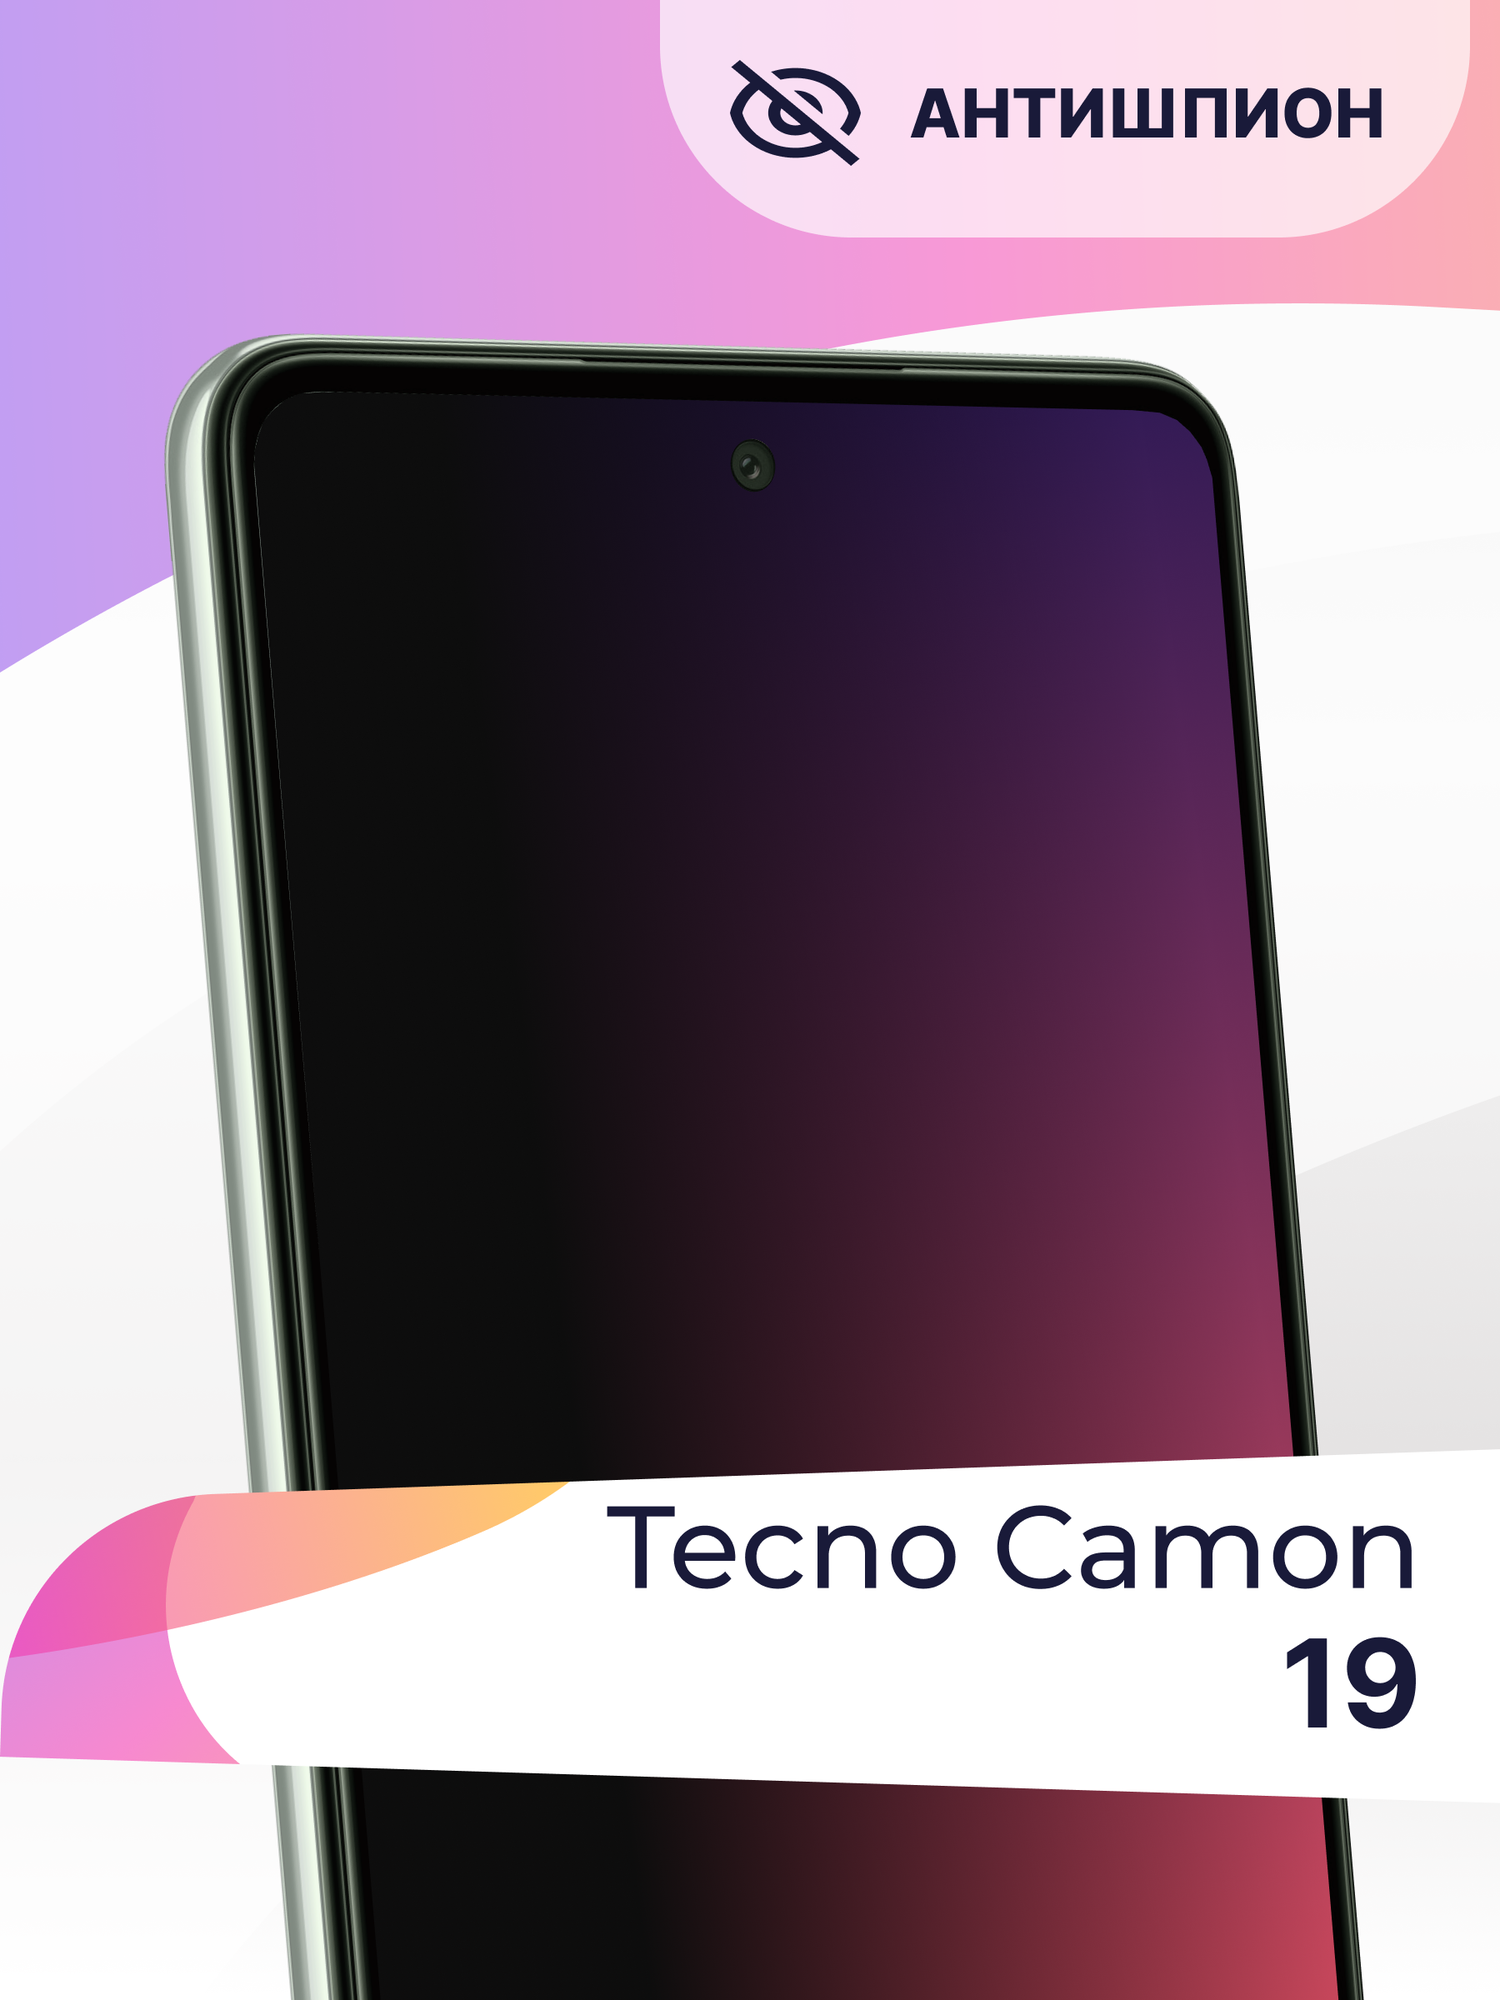 Защитное стекло Антишпион на телефон Tecno Camon 19 / Premium 5D стекло для смартфона Техно Камон 19 с черной рамкой / Противоударное стекло